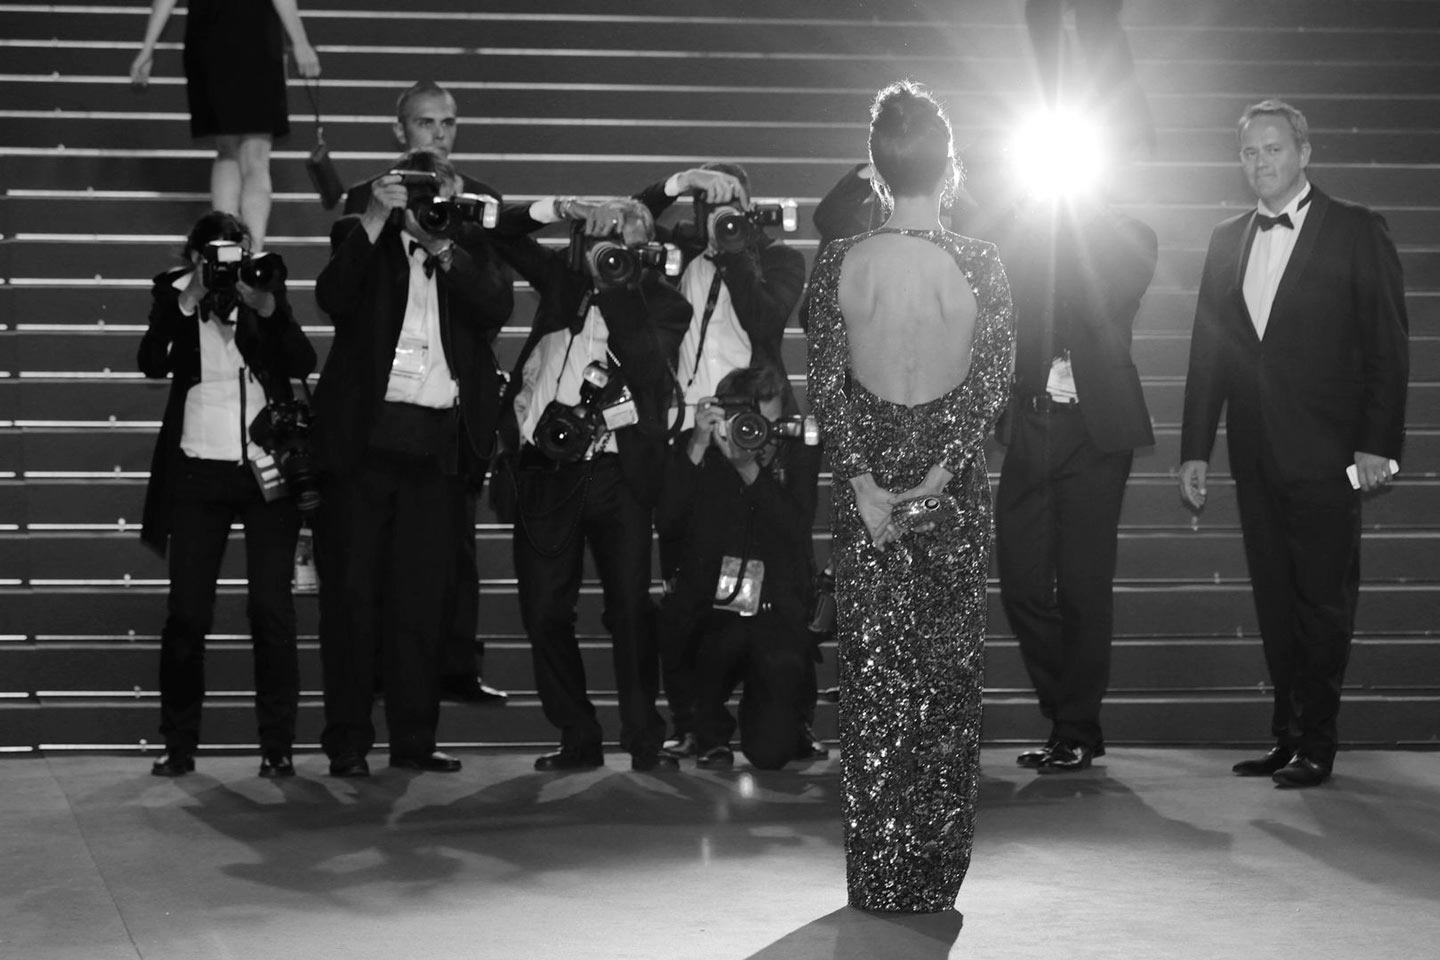 Christie ilumina la alfombra roja del Festival de Cannes con su tecnología